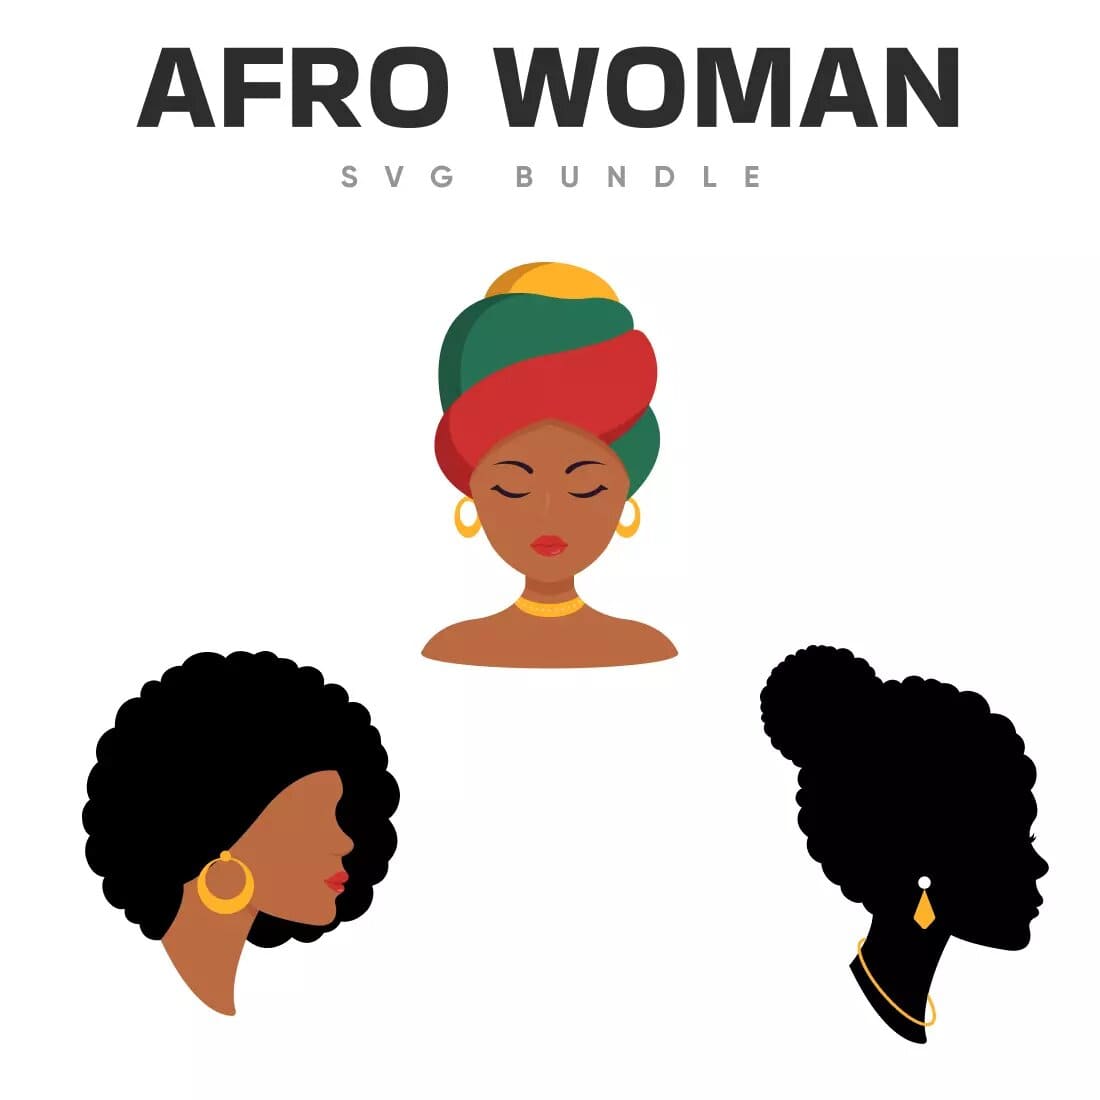 Afro Woman SVG Bundle Preview 1.